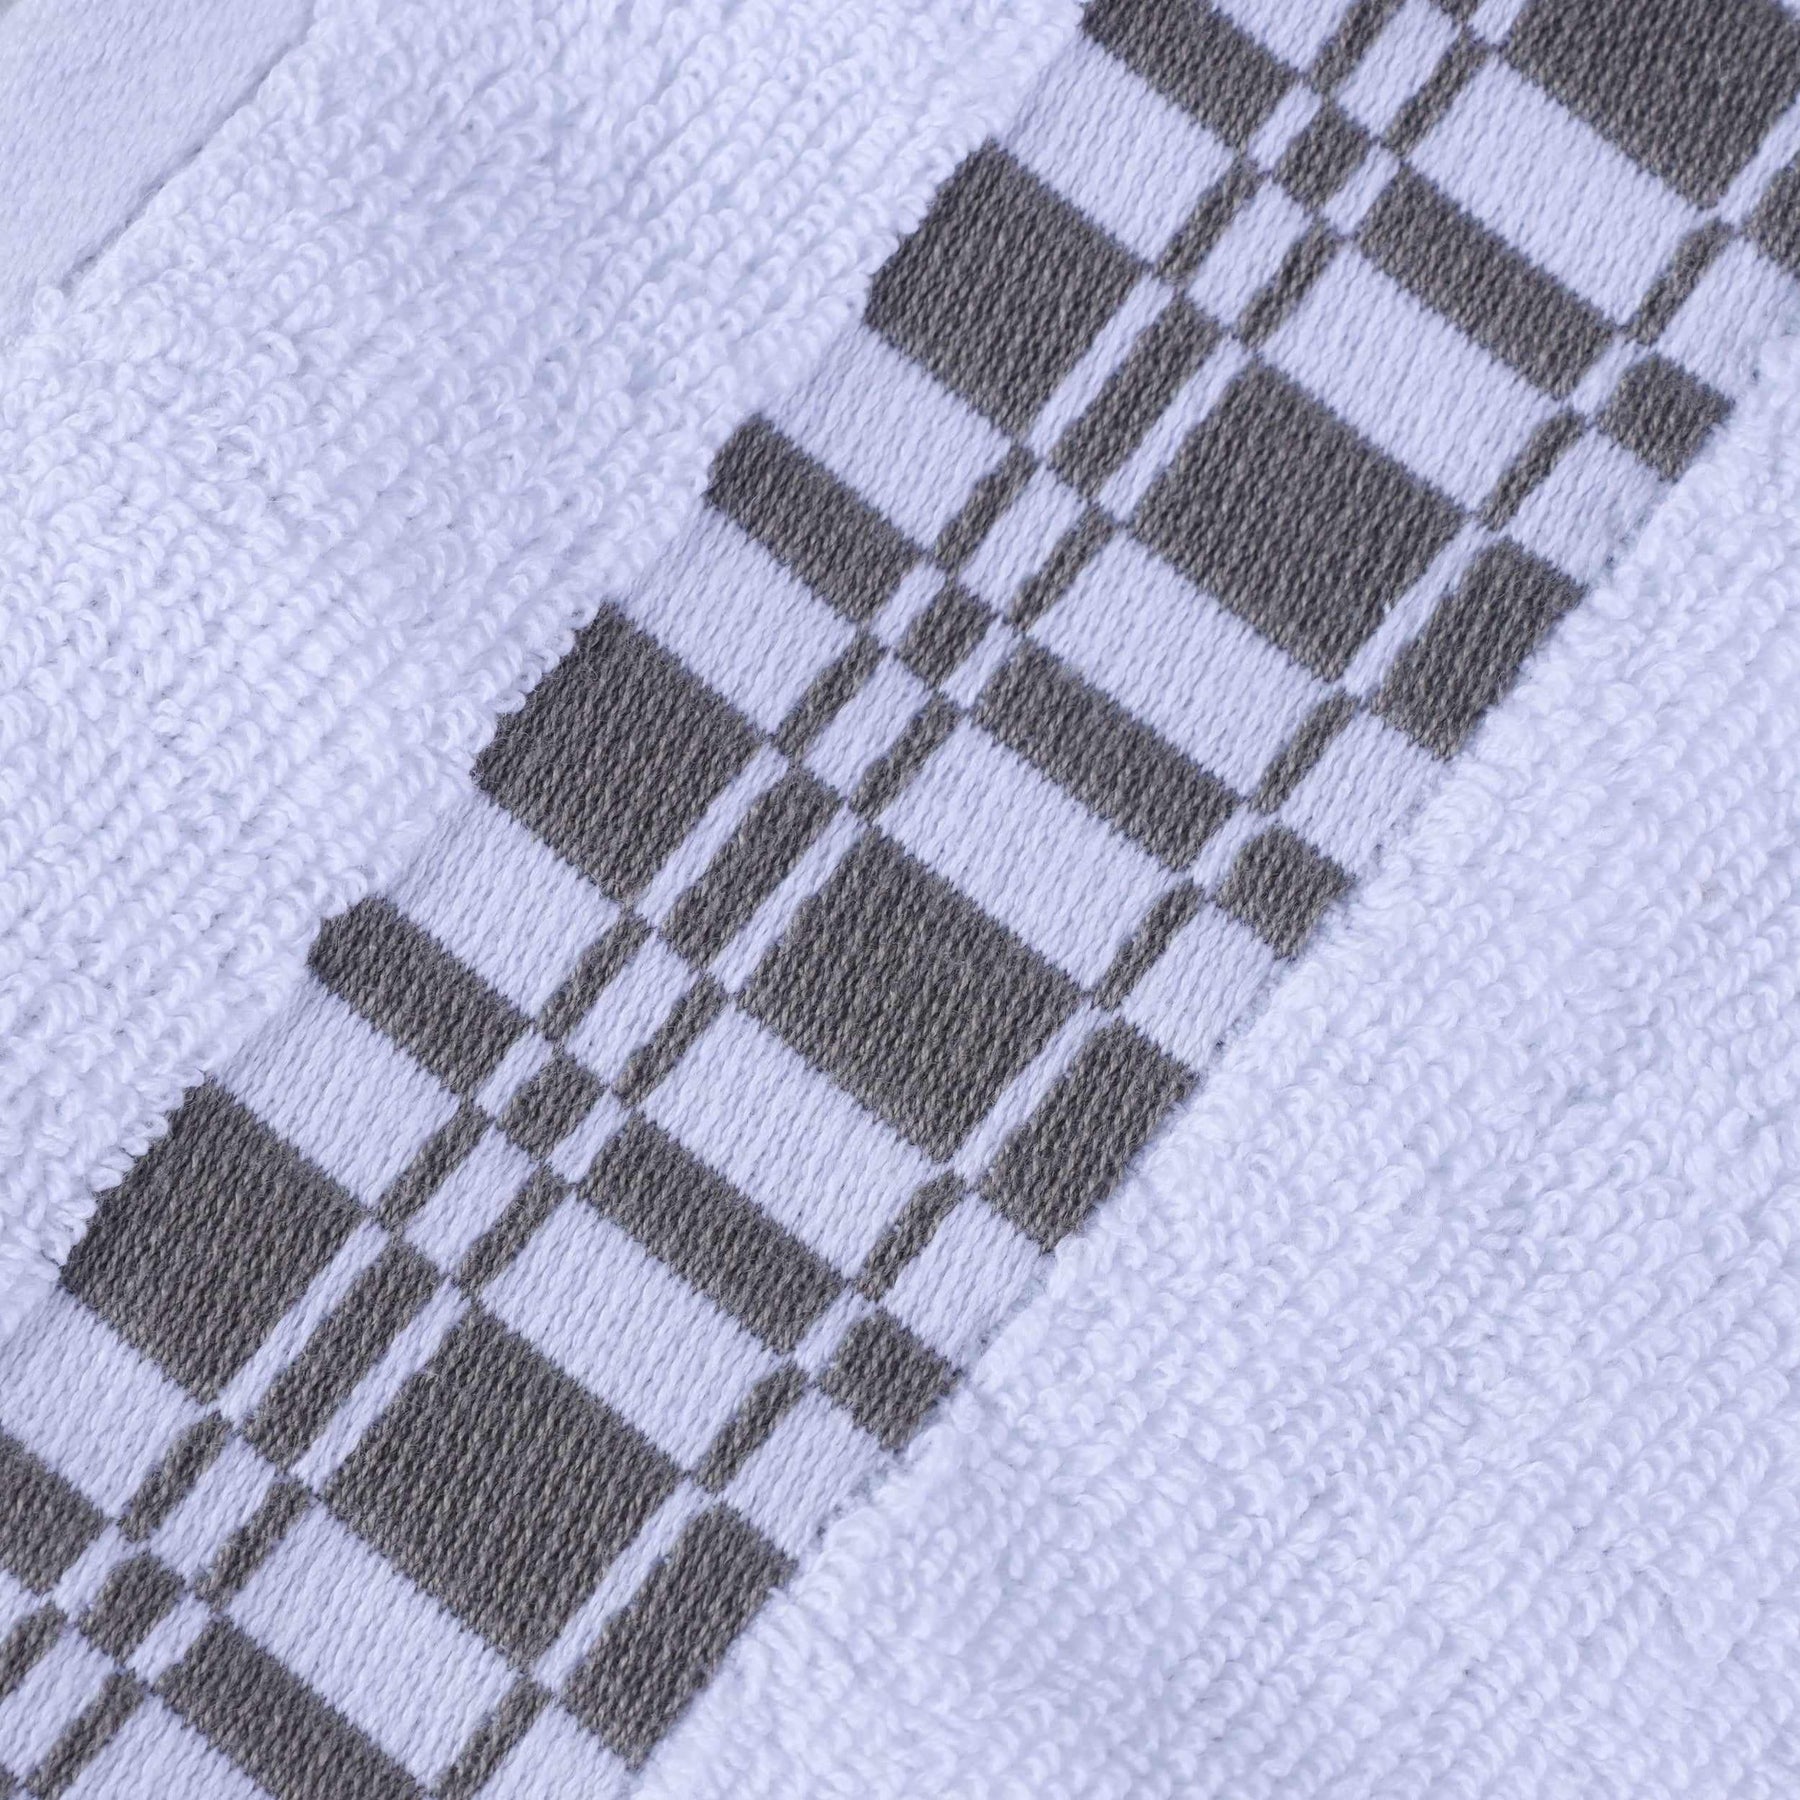  Superior Larissa Cotton 4-Piece Bath Towel Set with Geometric Embroidered Jacquard Border - White